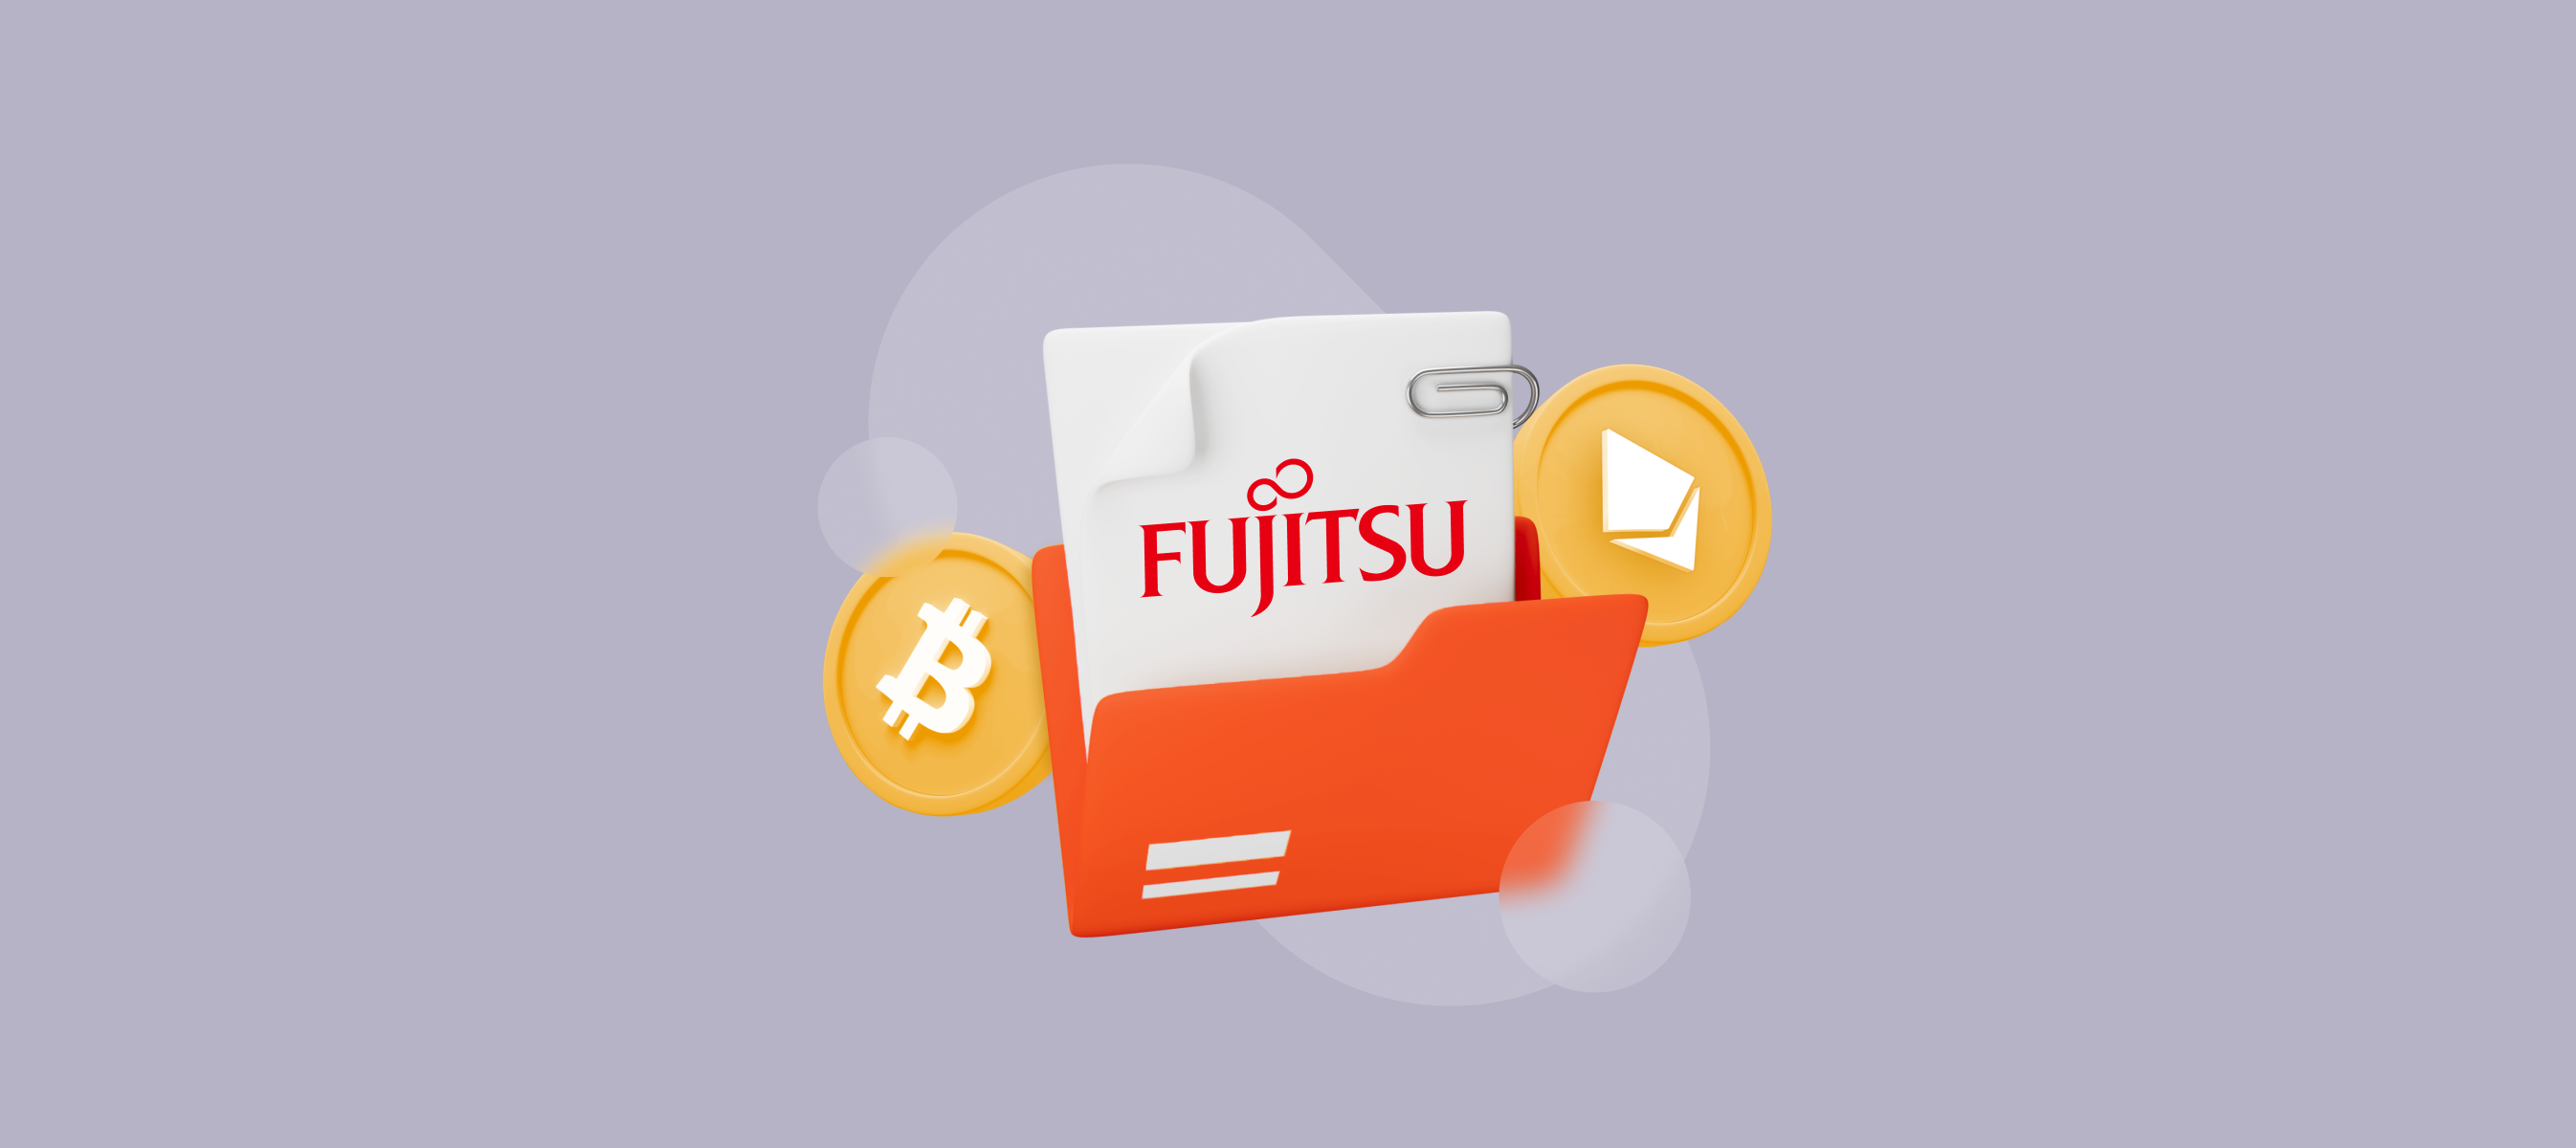 fujitsu-files-trademark-for-crypto-services